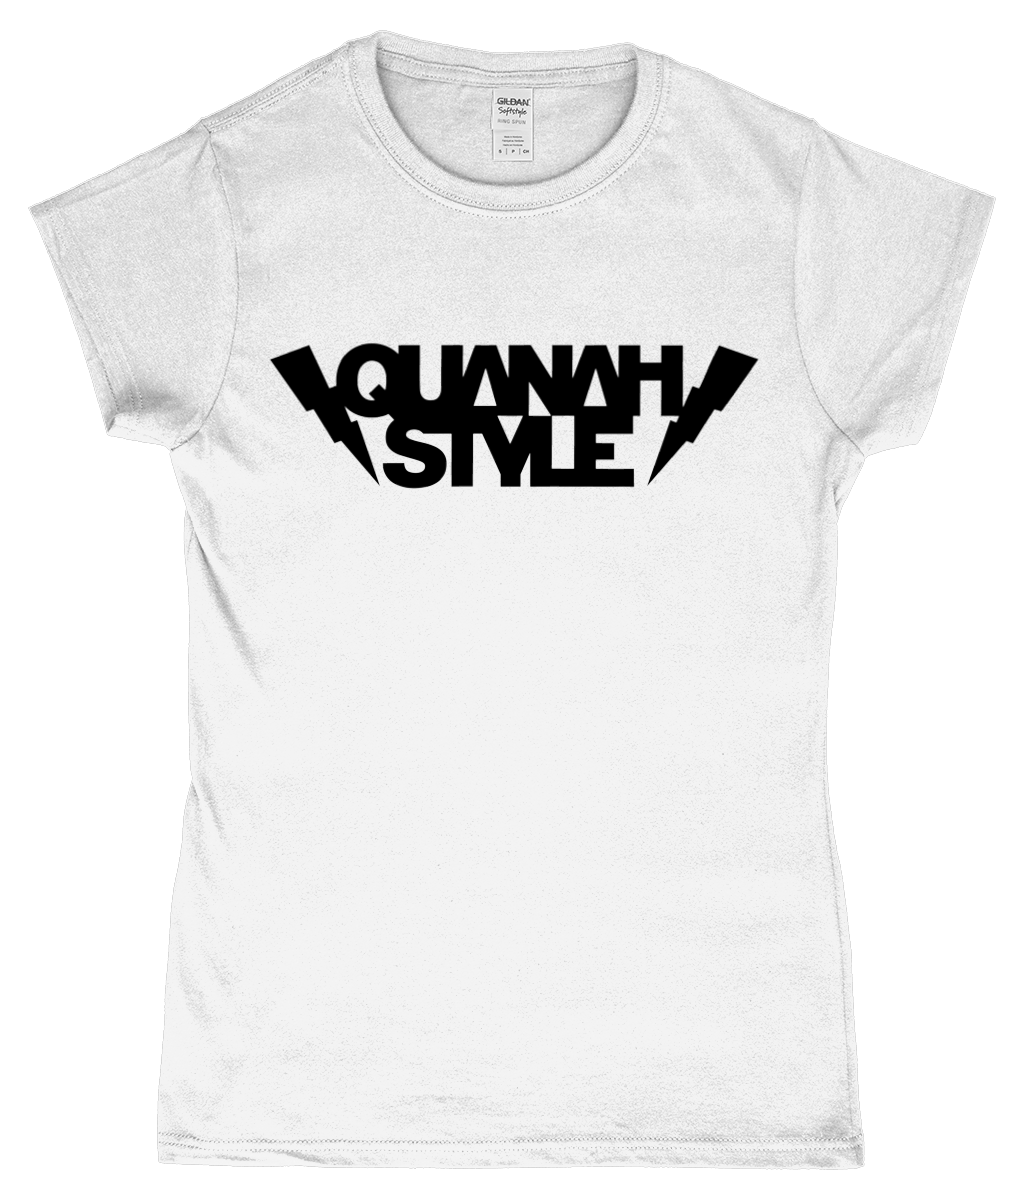 Quanah Style - Black Logo Ladies T-Shirt - SNATCHED MERCH